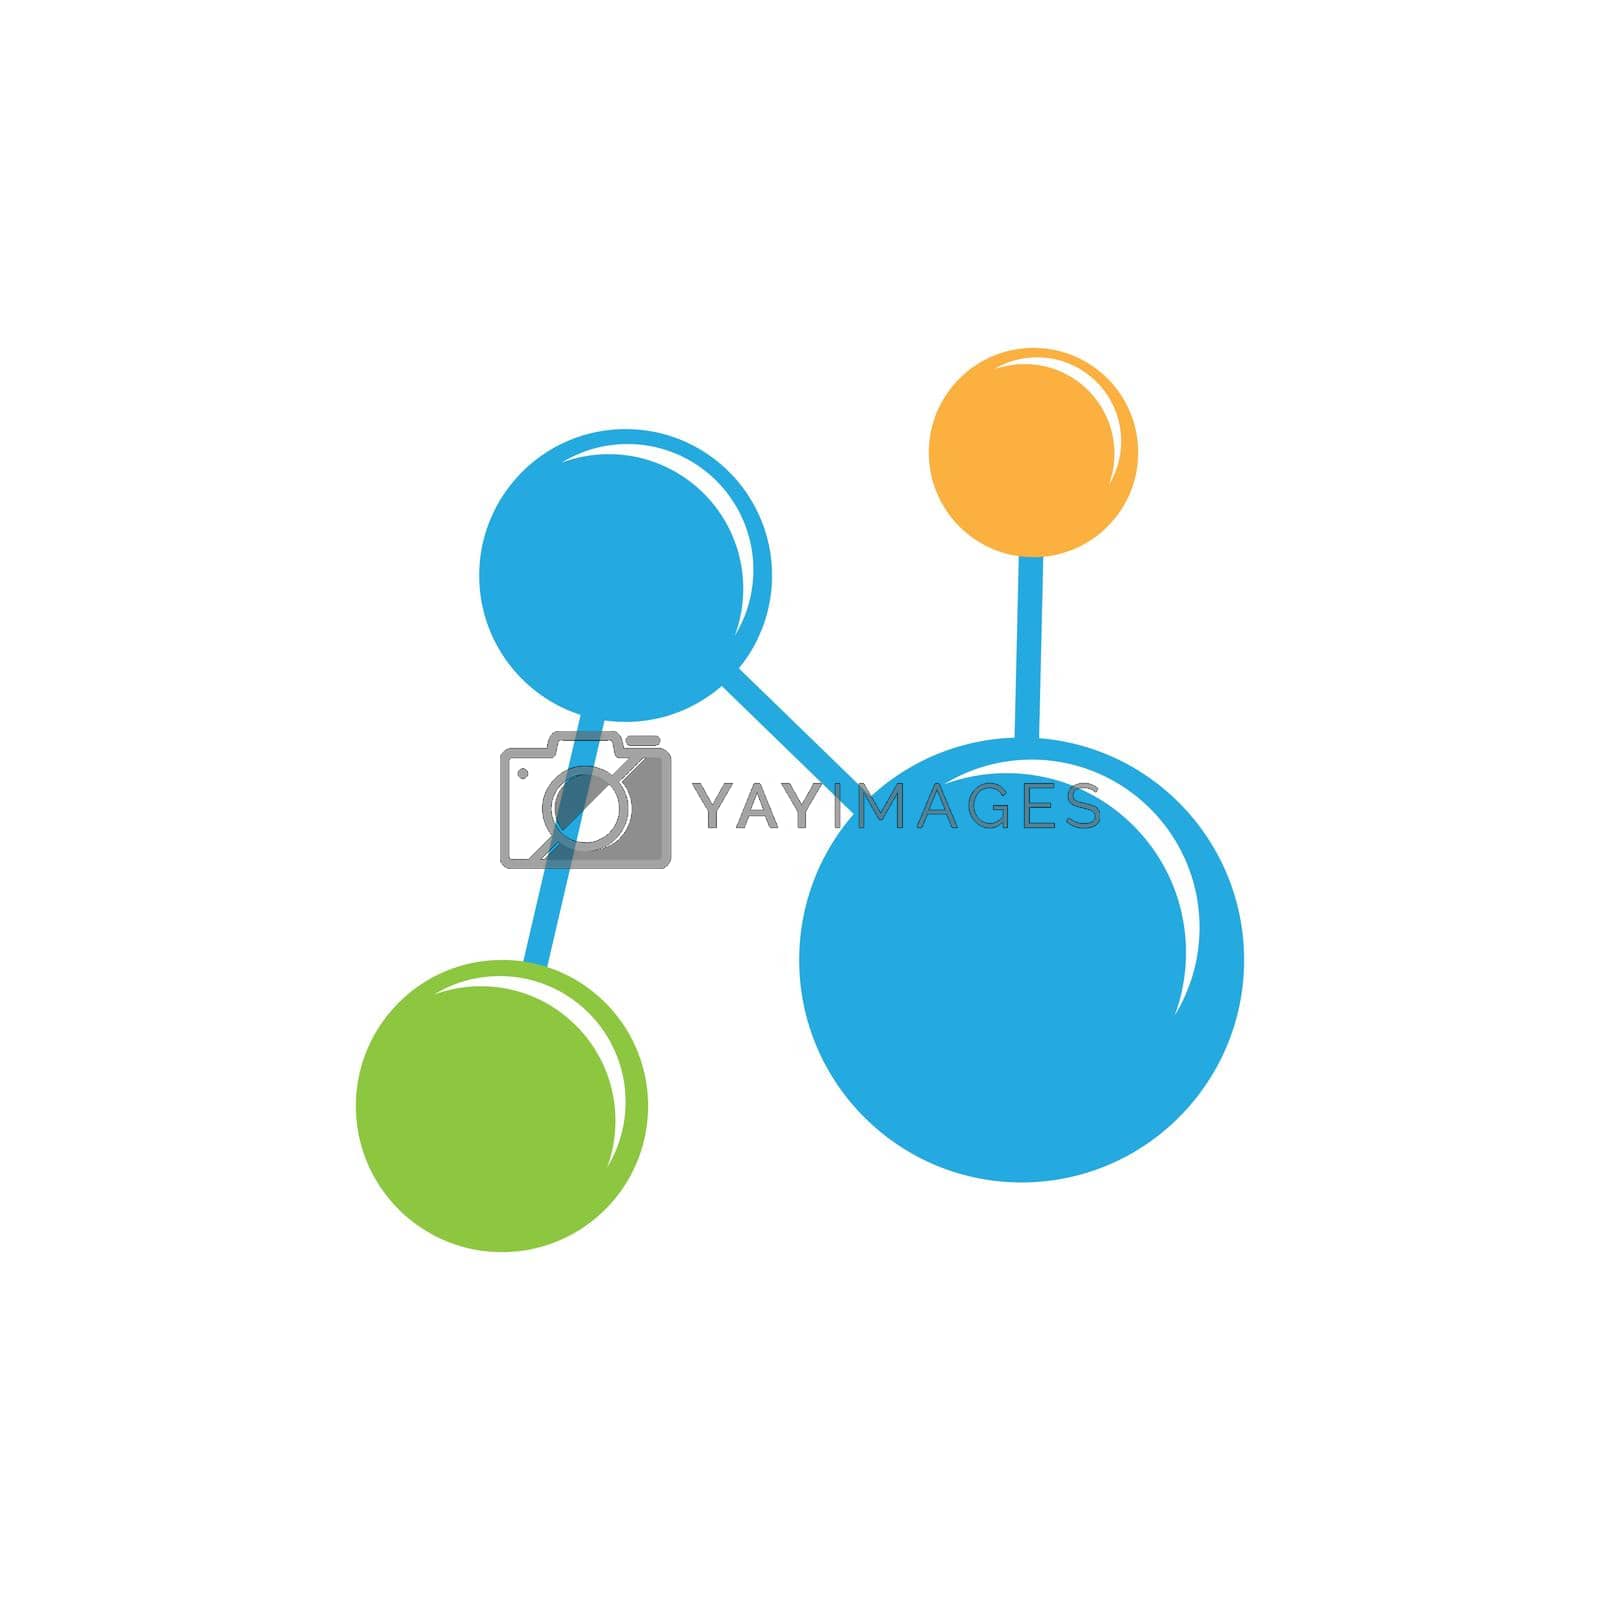 Royalty free image of Molecule logo illustration by awk